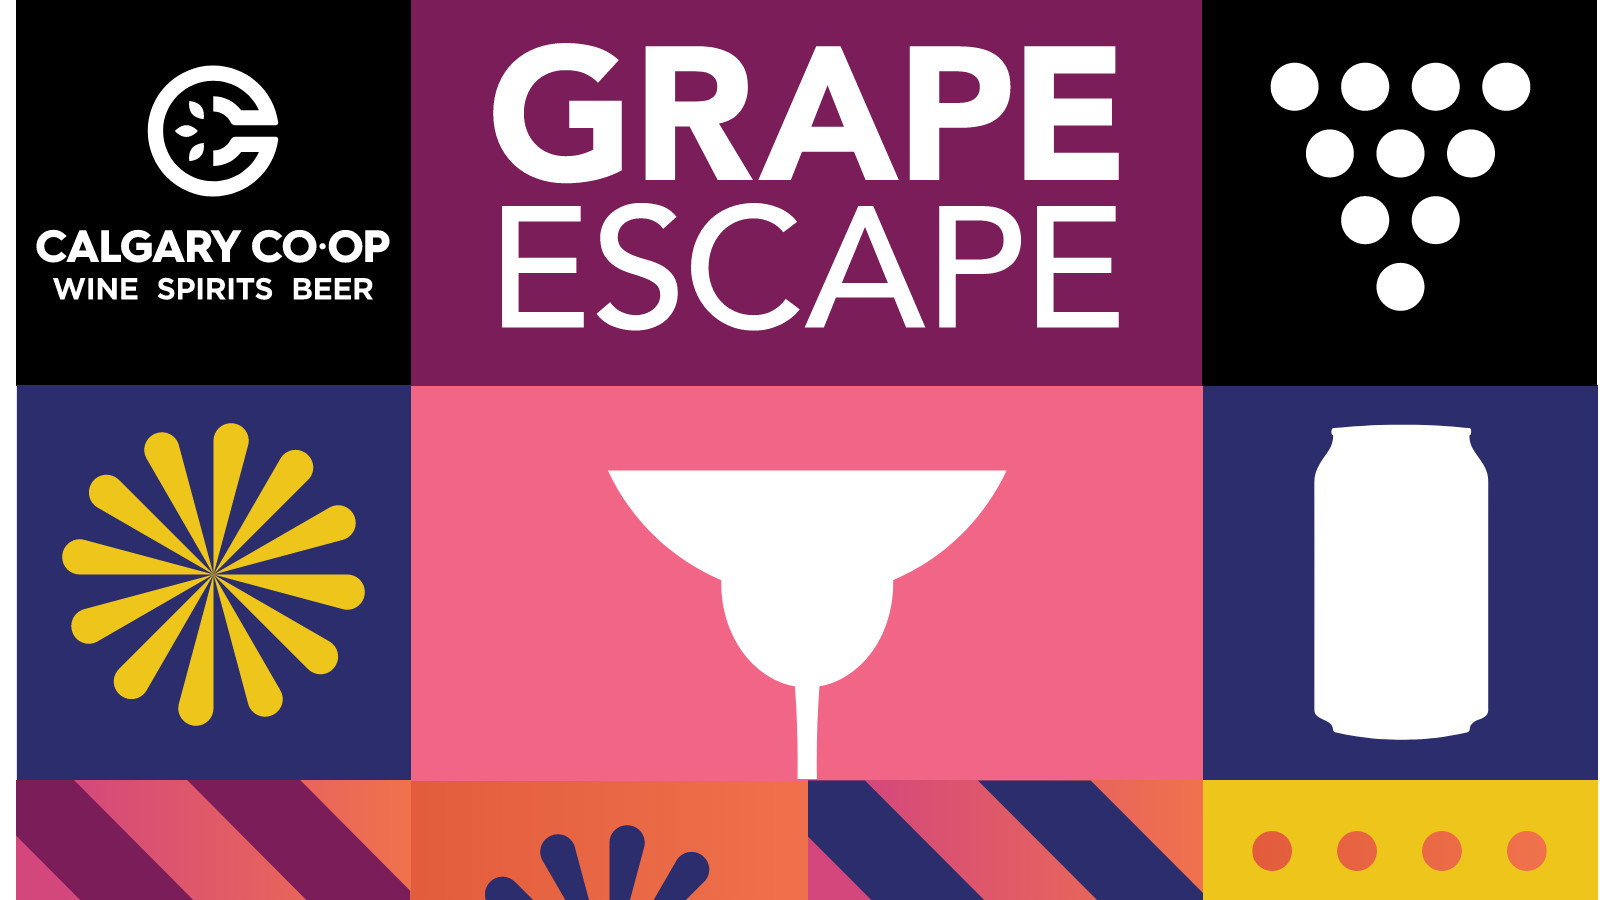 Grape Escape 2024!! – Leadership Forsyth